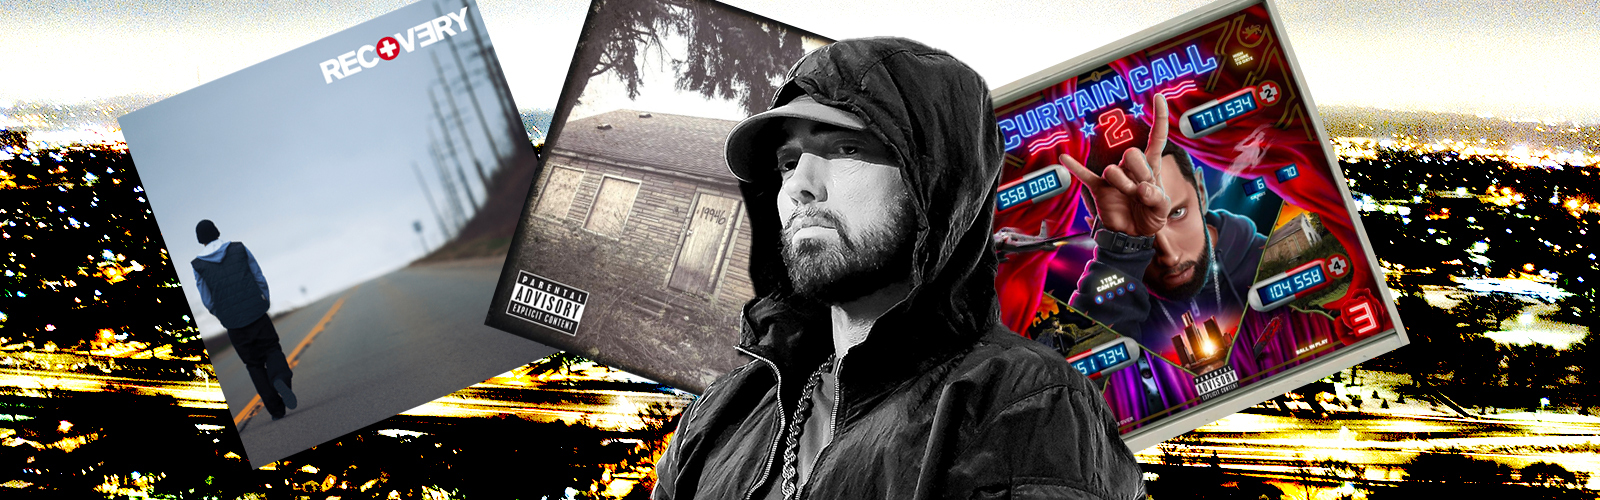 Eminem's 'Recovery' Breaks Digital Album Sales Record